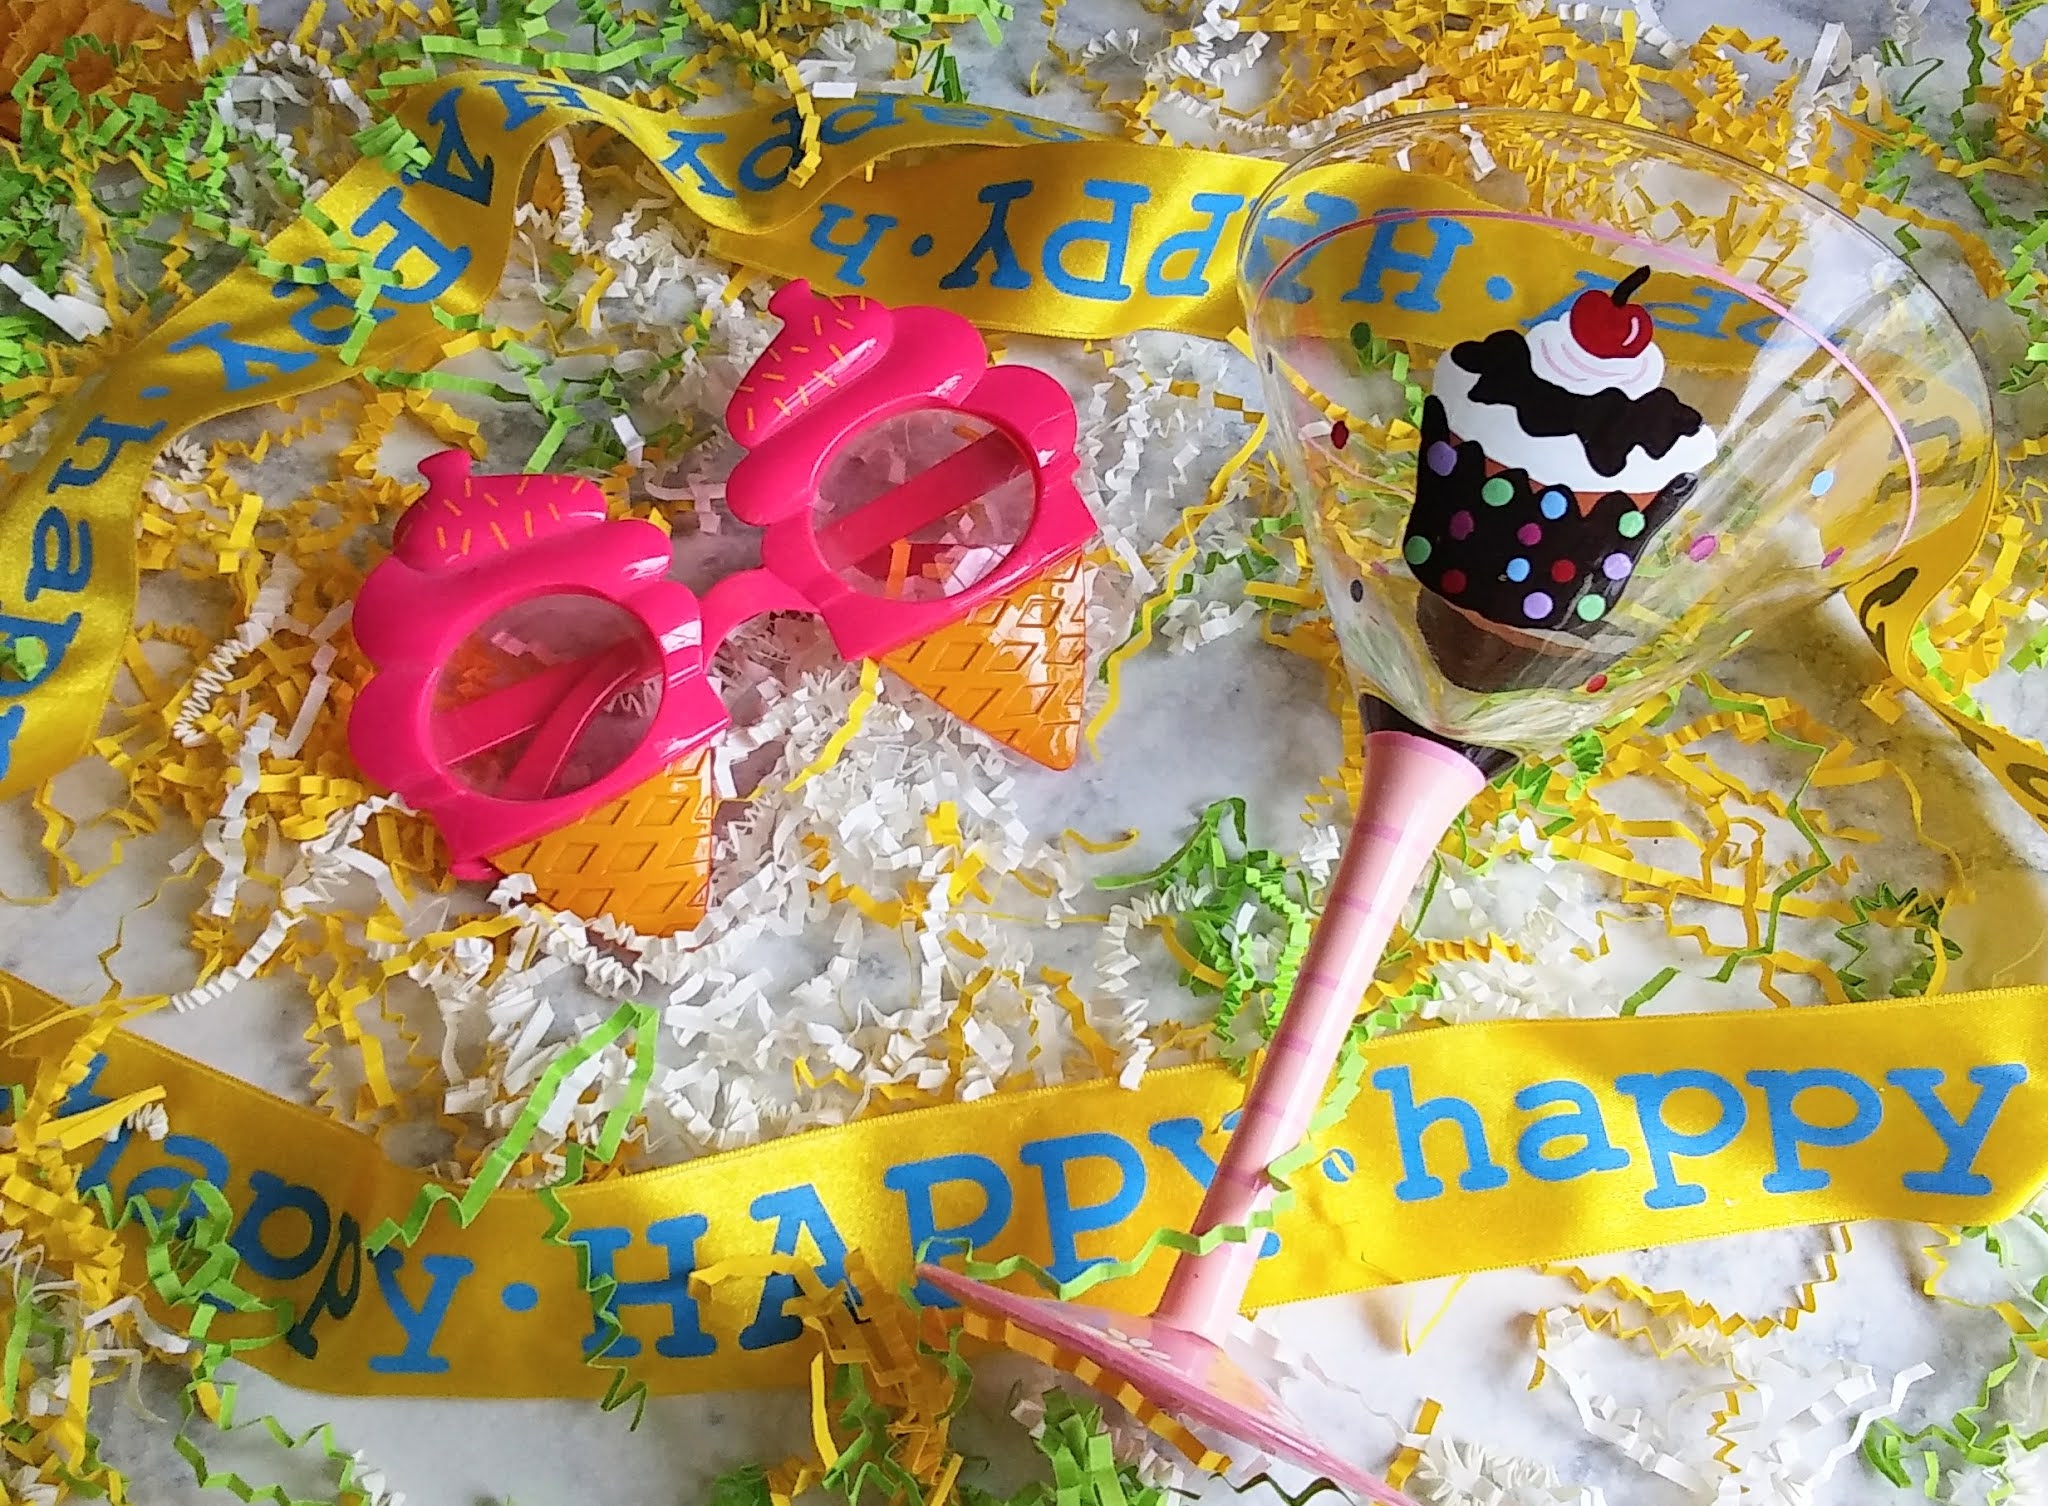 Pin on Top Kids Birthday Party Ideas